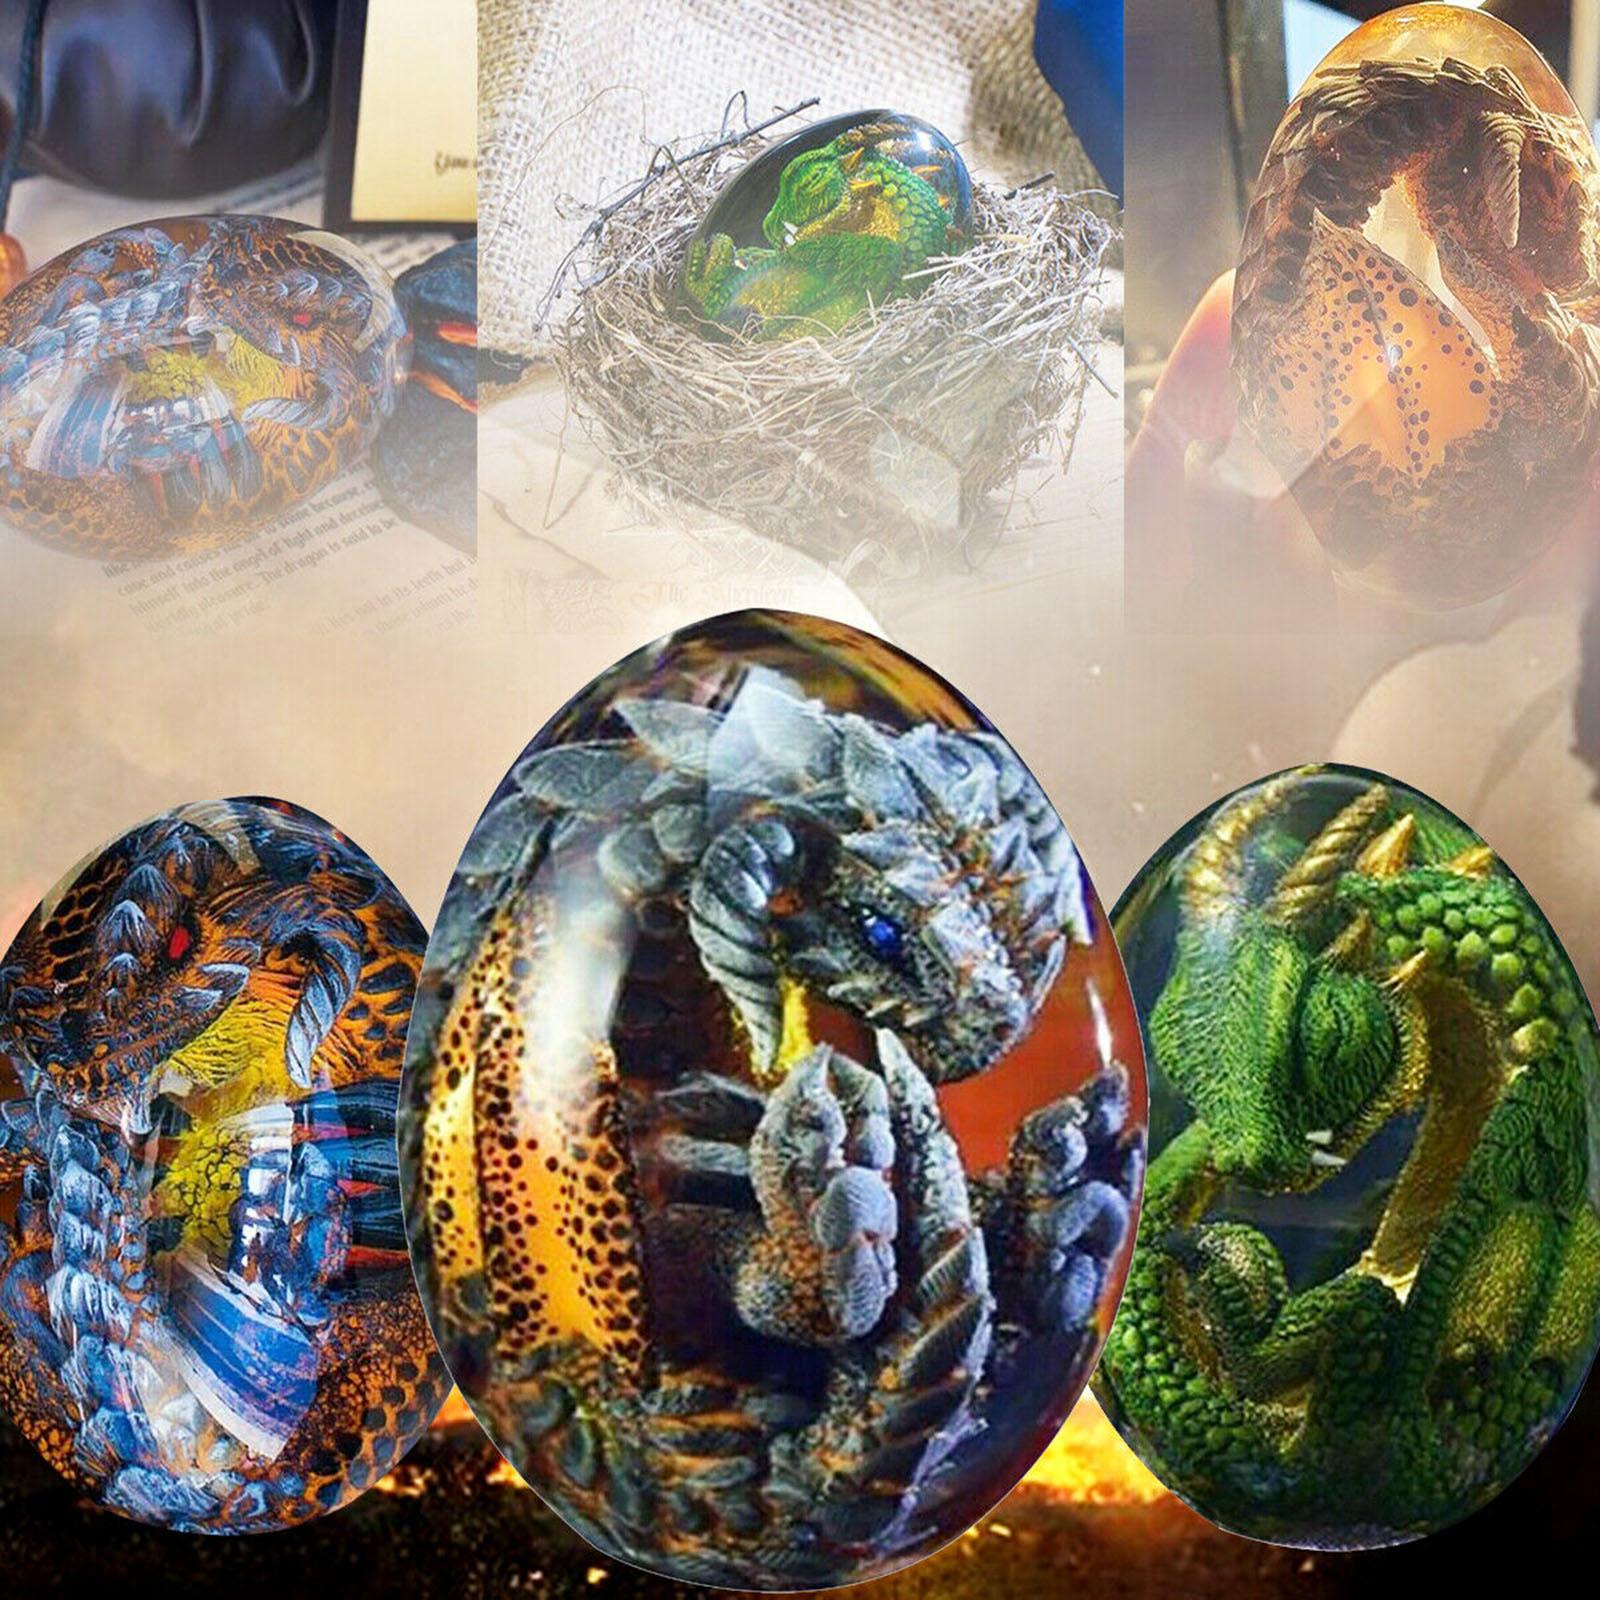 Dragon Egg Crystal Transparent Resin Sculpture Desktop Ornaments Blue